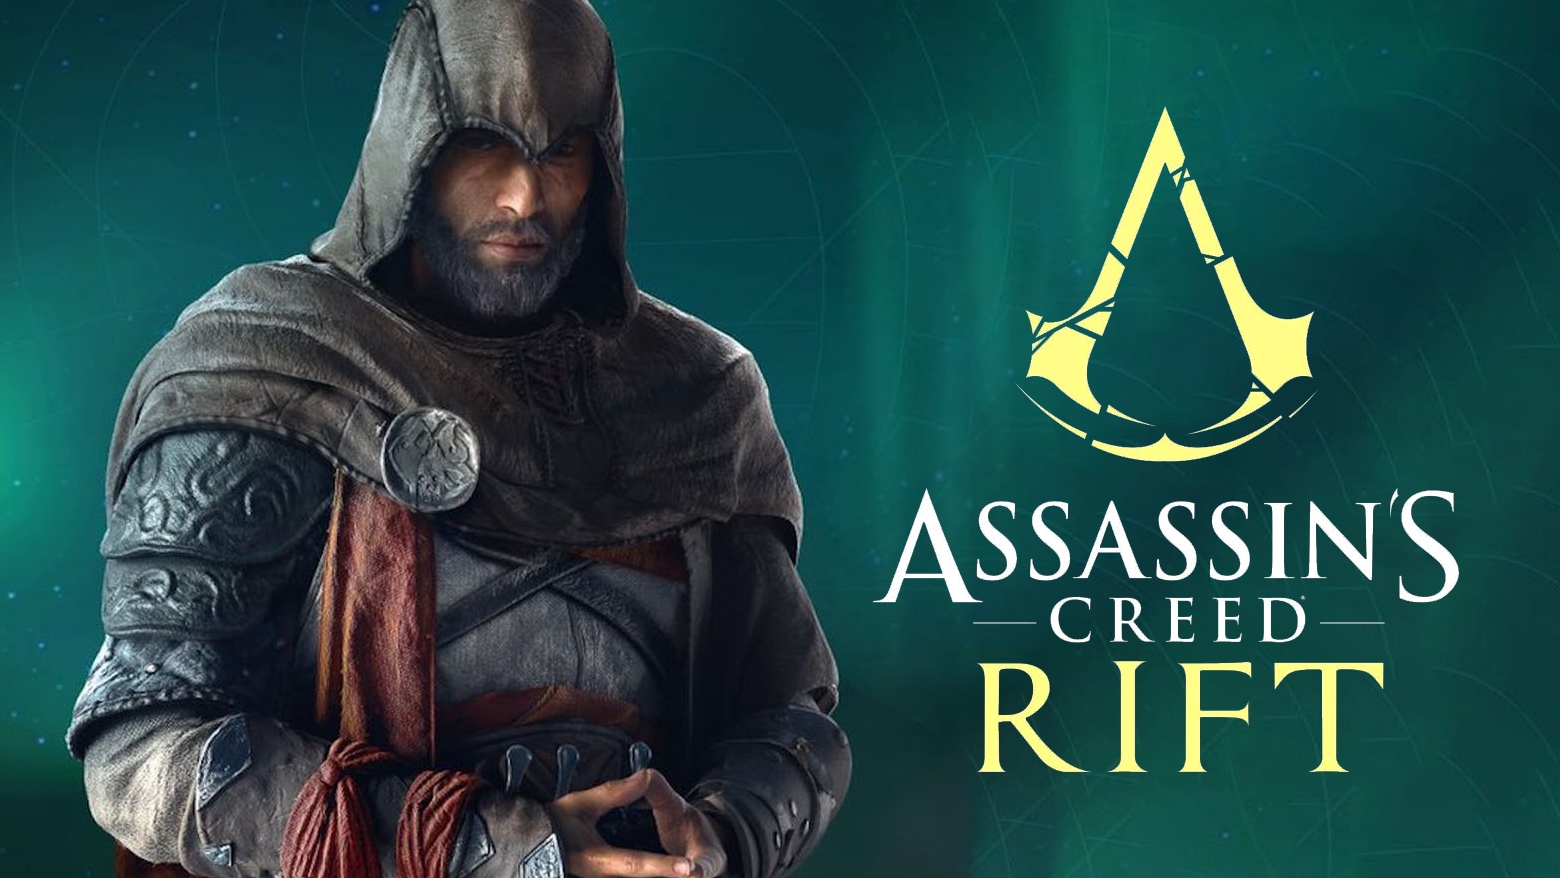 Assassin's Creed® Одиссея – ULTIMATE EDITION